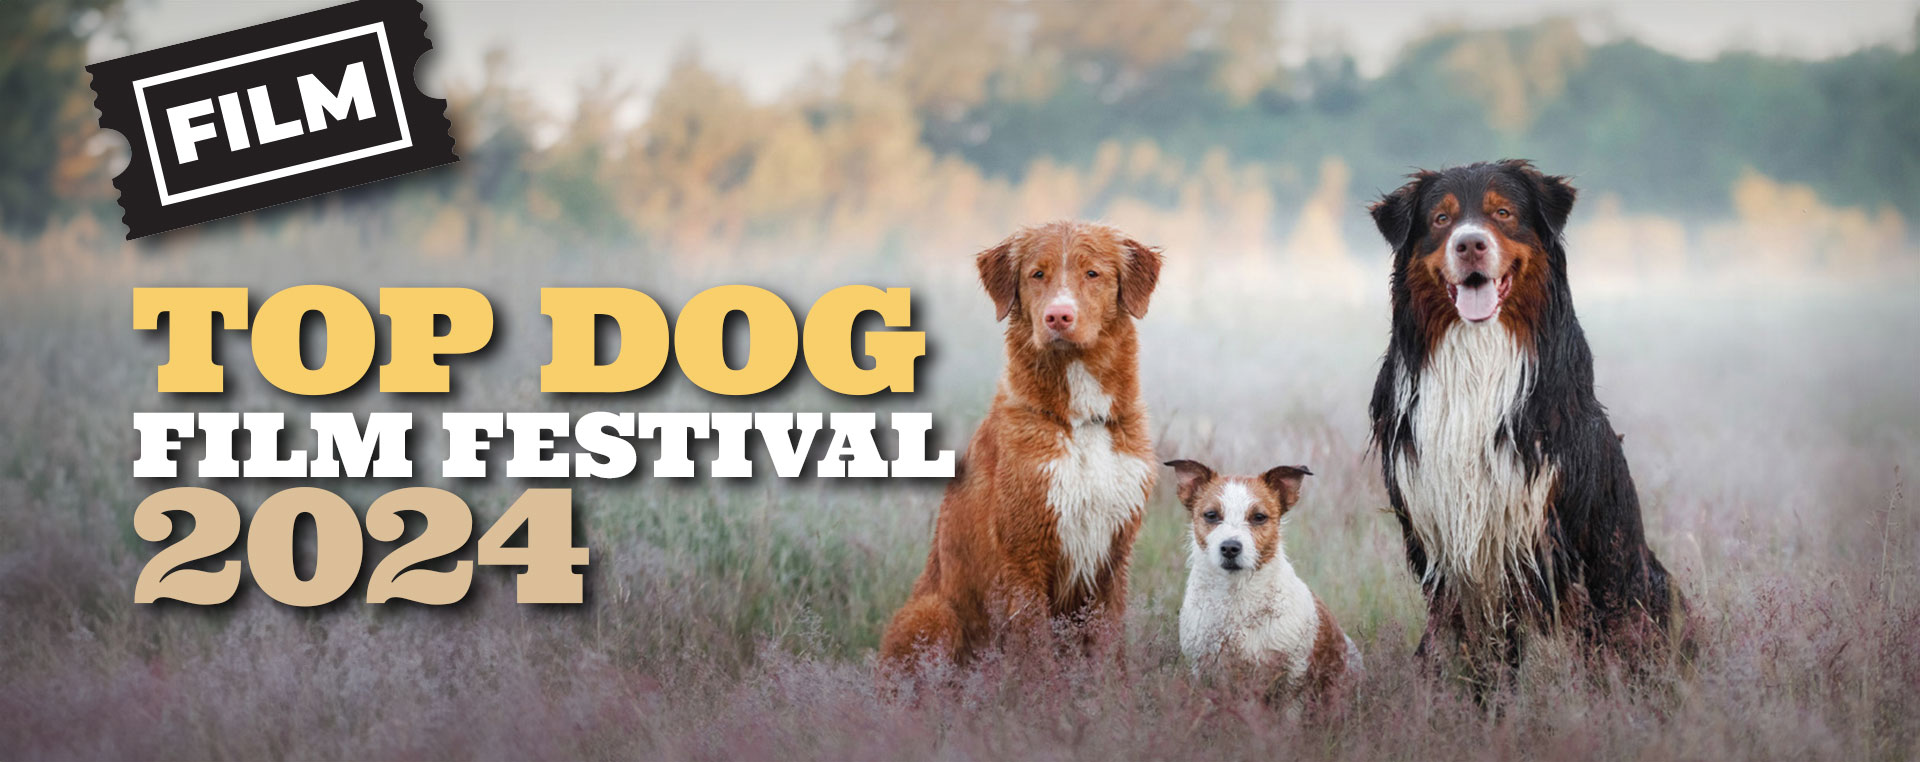 Top Dog Film Festival 2024 3 Aug NSW